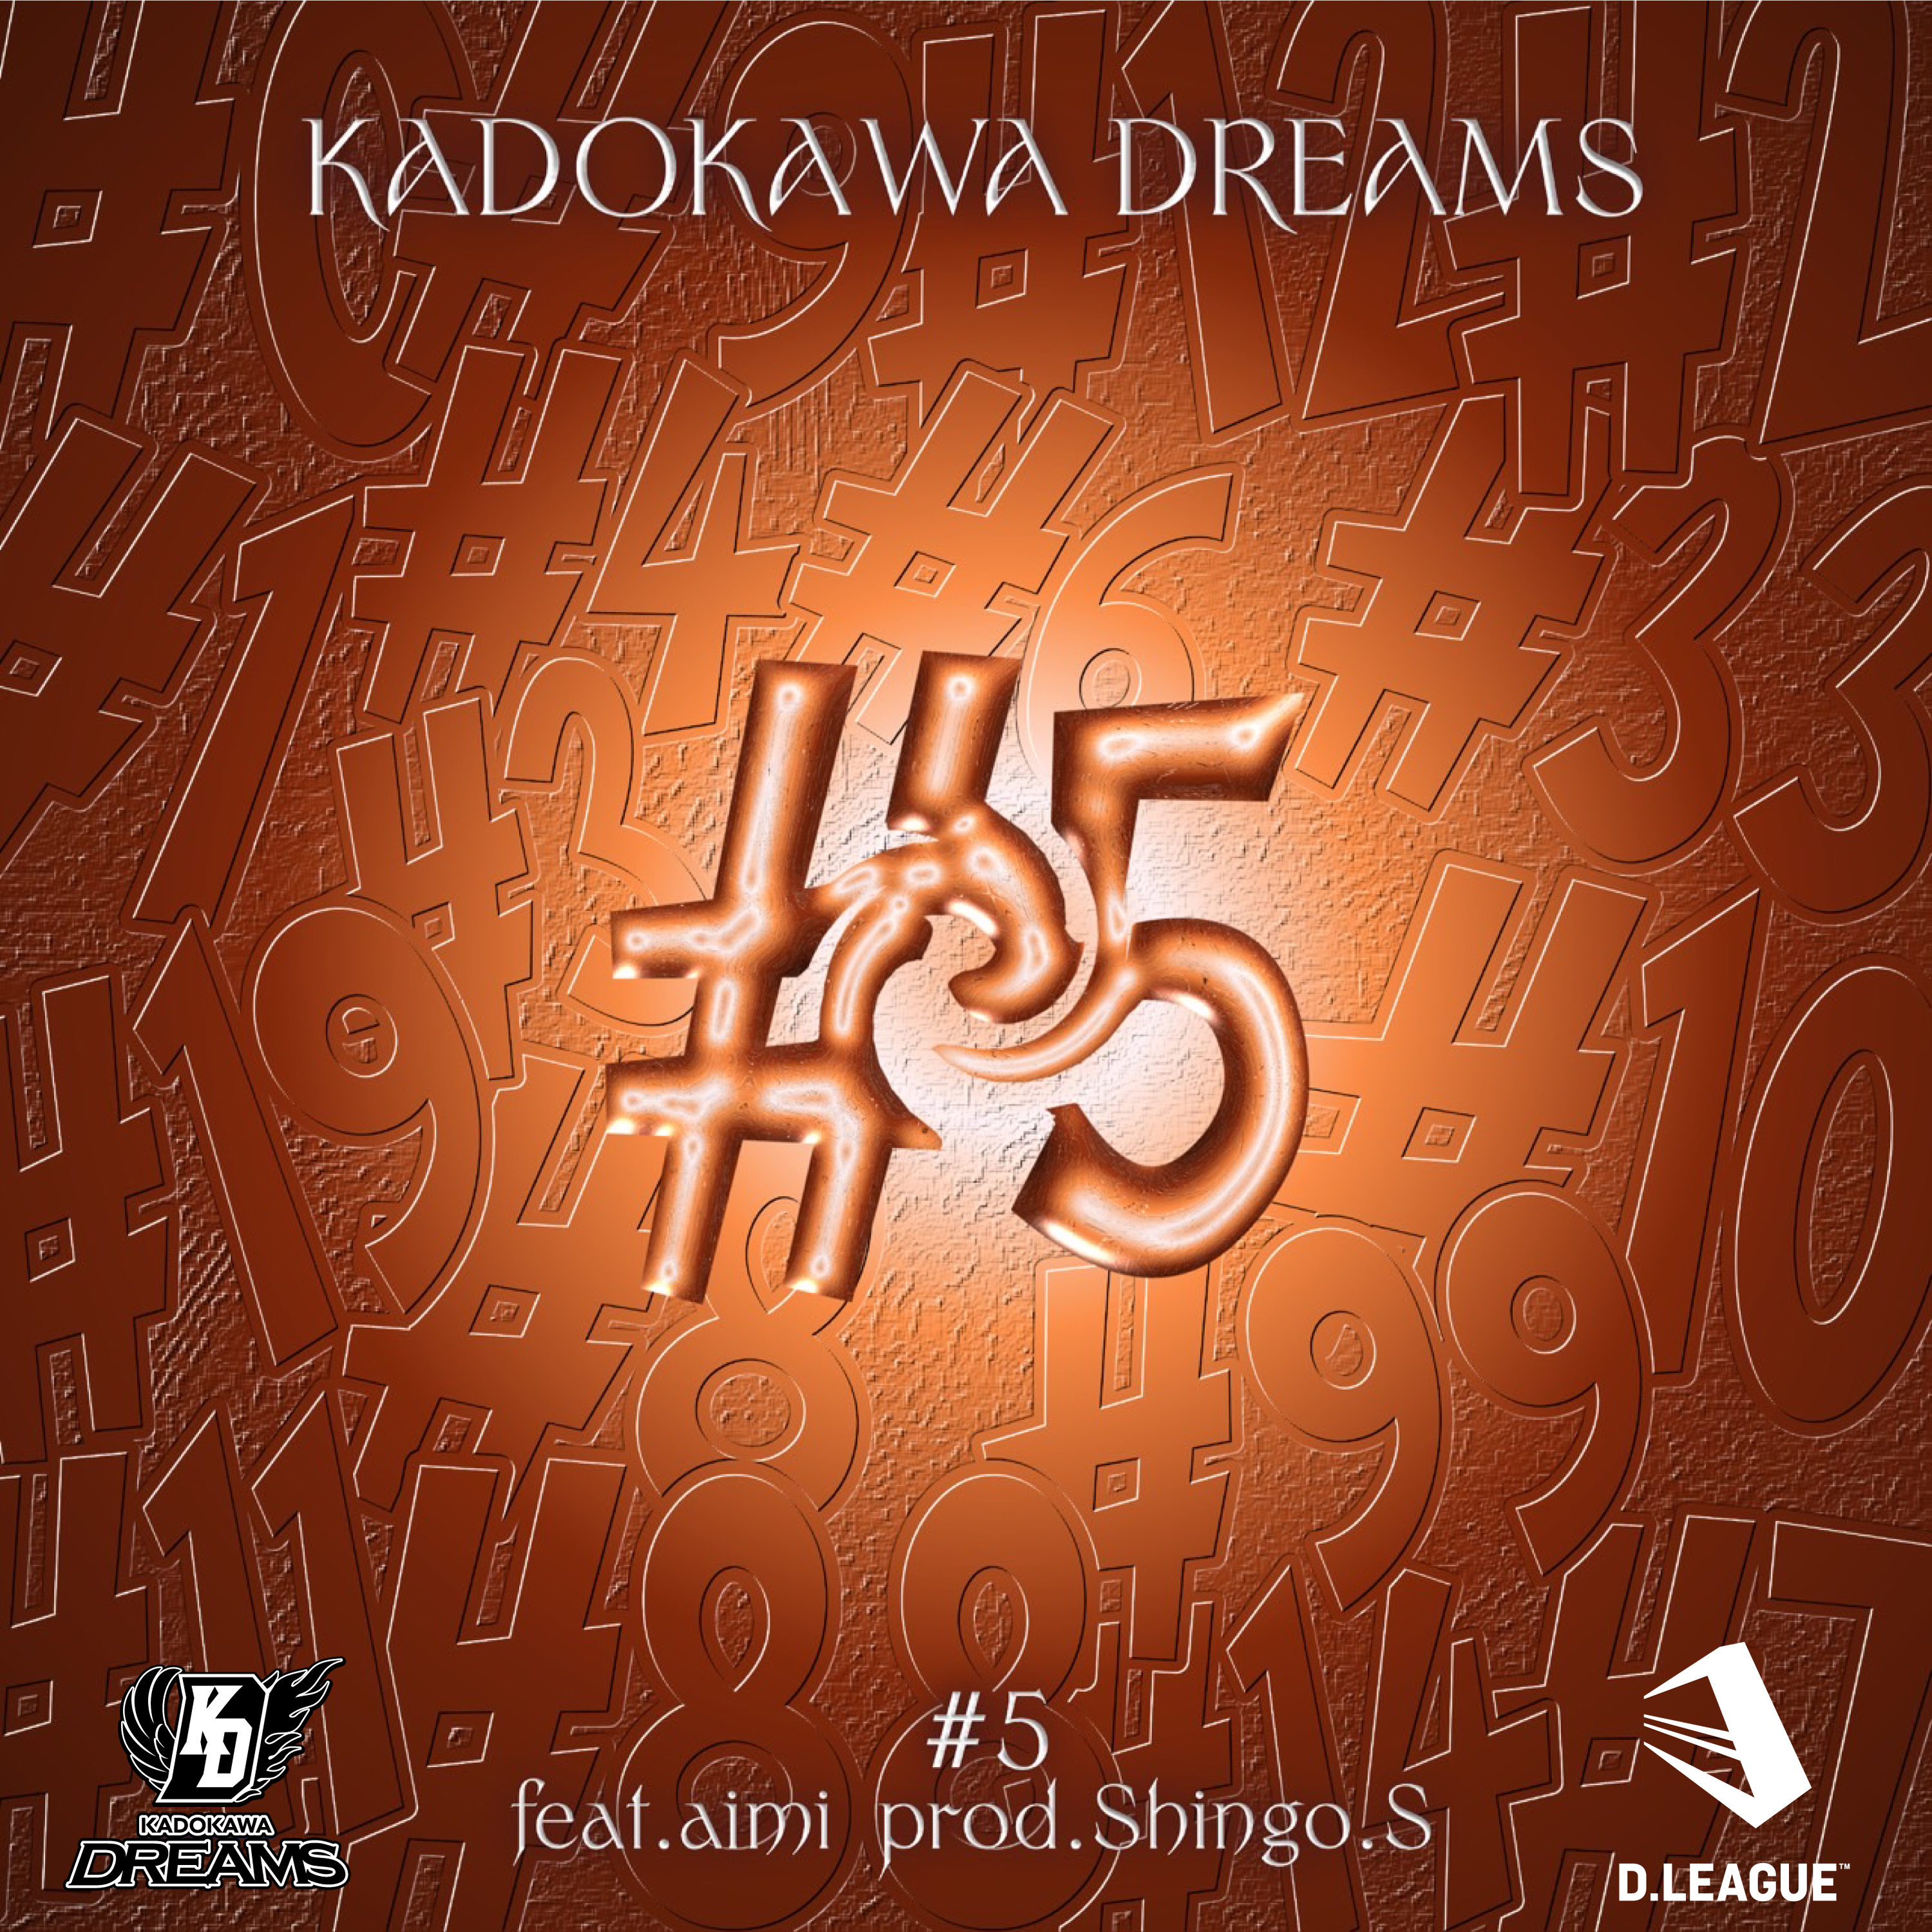 KADOKAWA DREAMS ROUND.8使⽤楽曲「#5 feat.aimi prod.Shingo.S